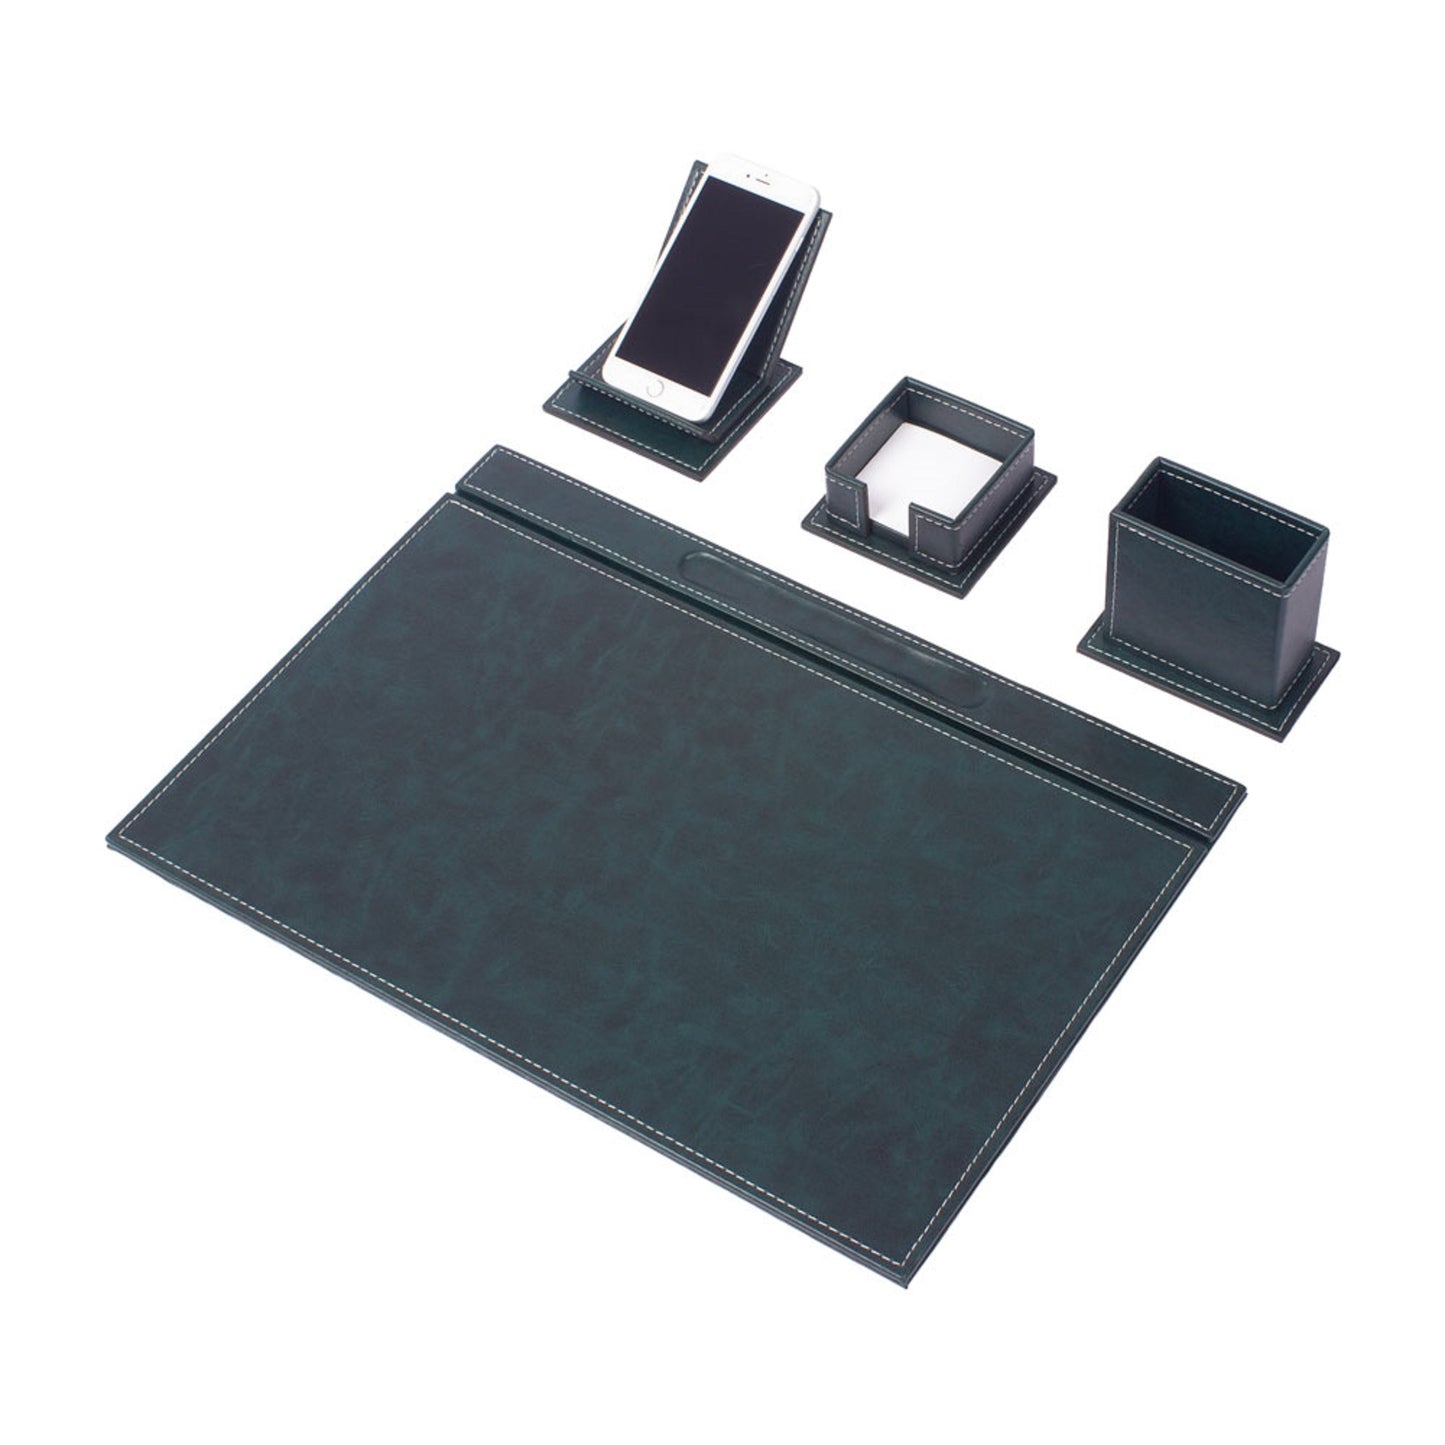 MOOG  Luxury Desk Set -  Leather Desk Set with 4 accessories - Organizer Set - Desk Office Accessories-Storage-Desk Organizers And Accessories-4 PCS